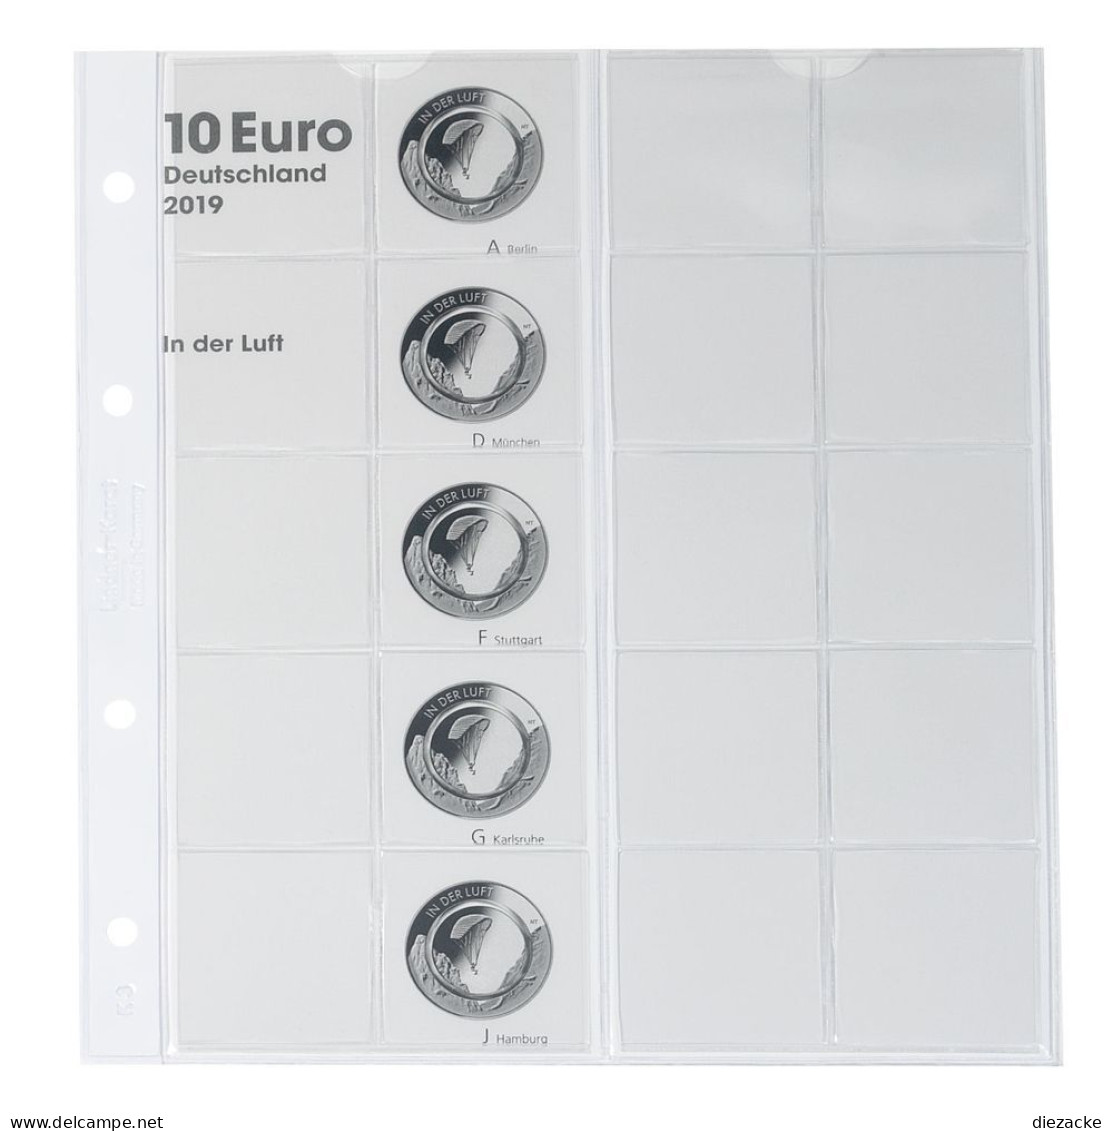 Lindner Vordruckblatt Karat Für 10 Euro-Münzen Polymerring 1110-1 Neu - Material